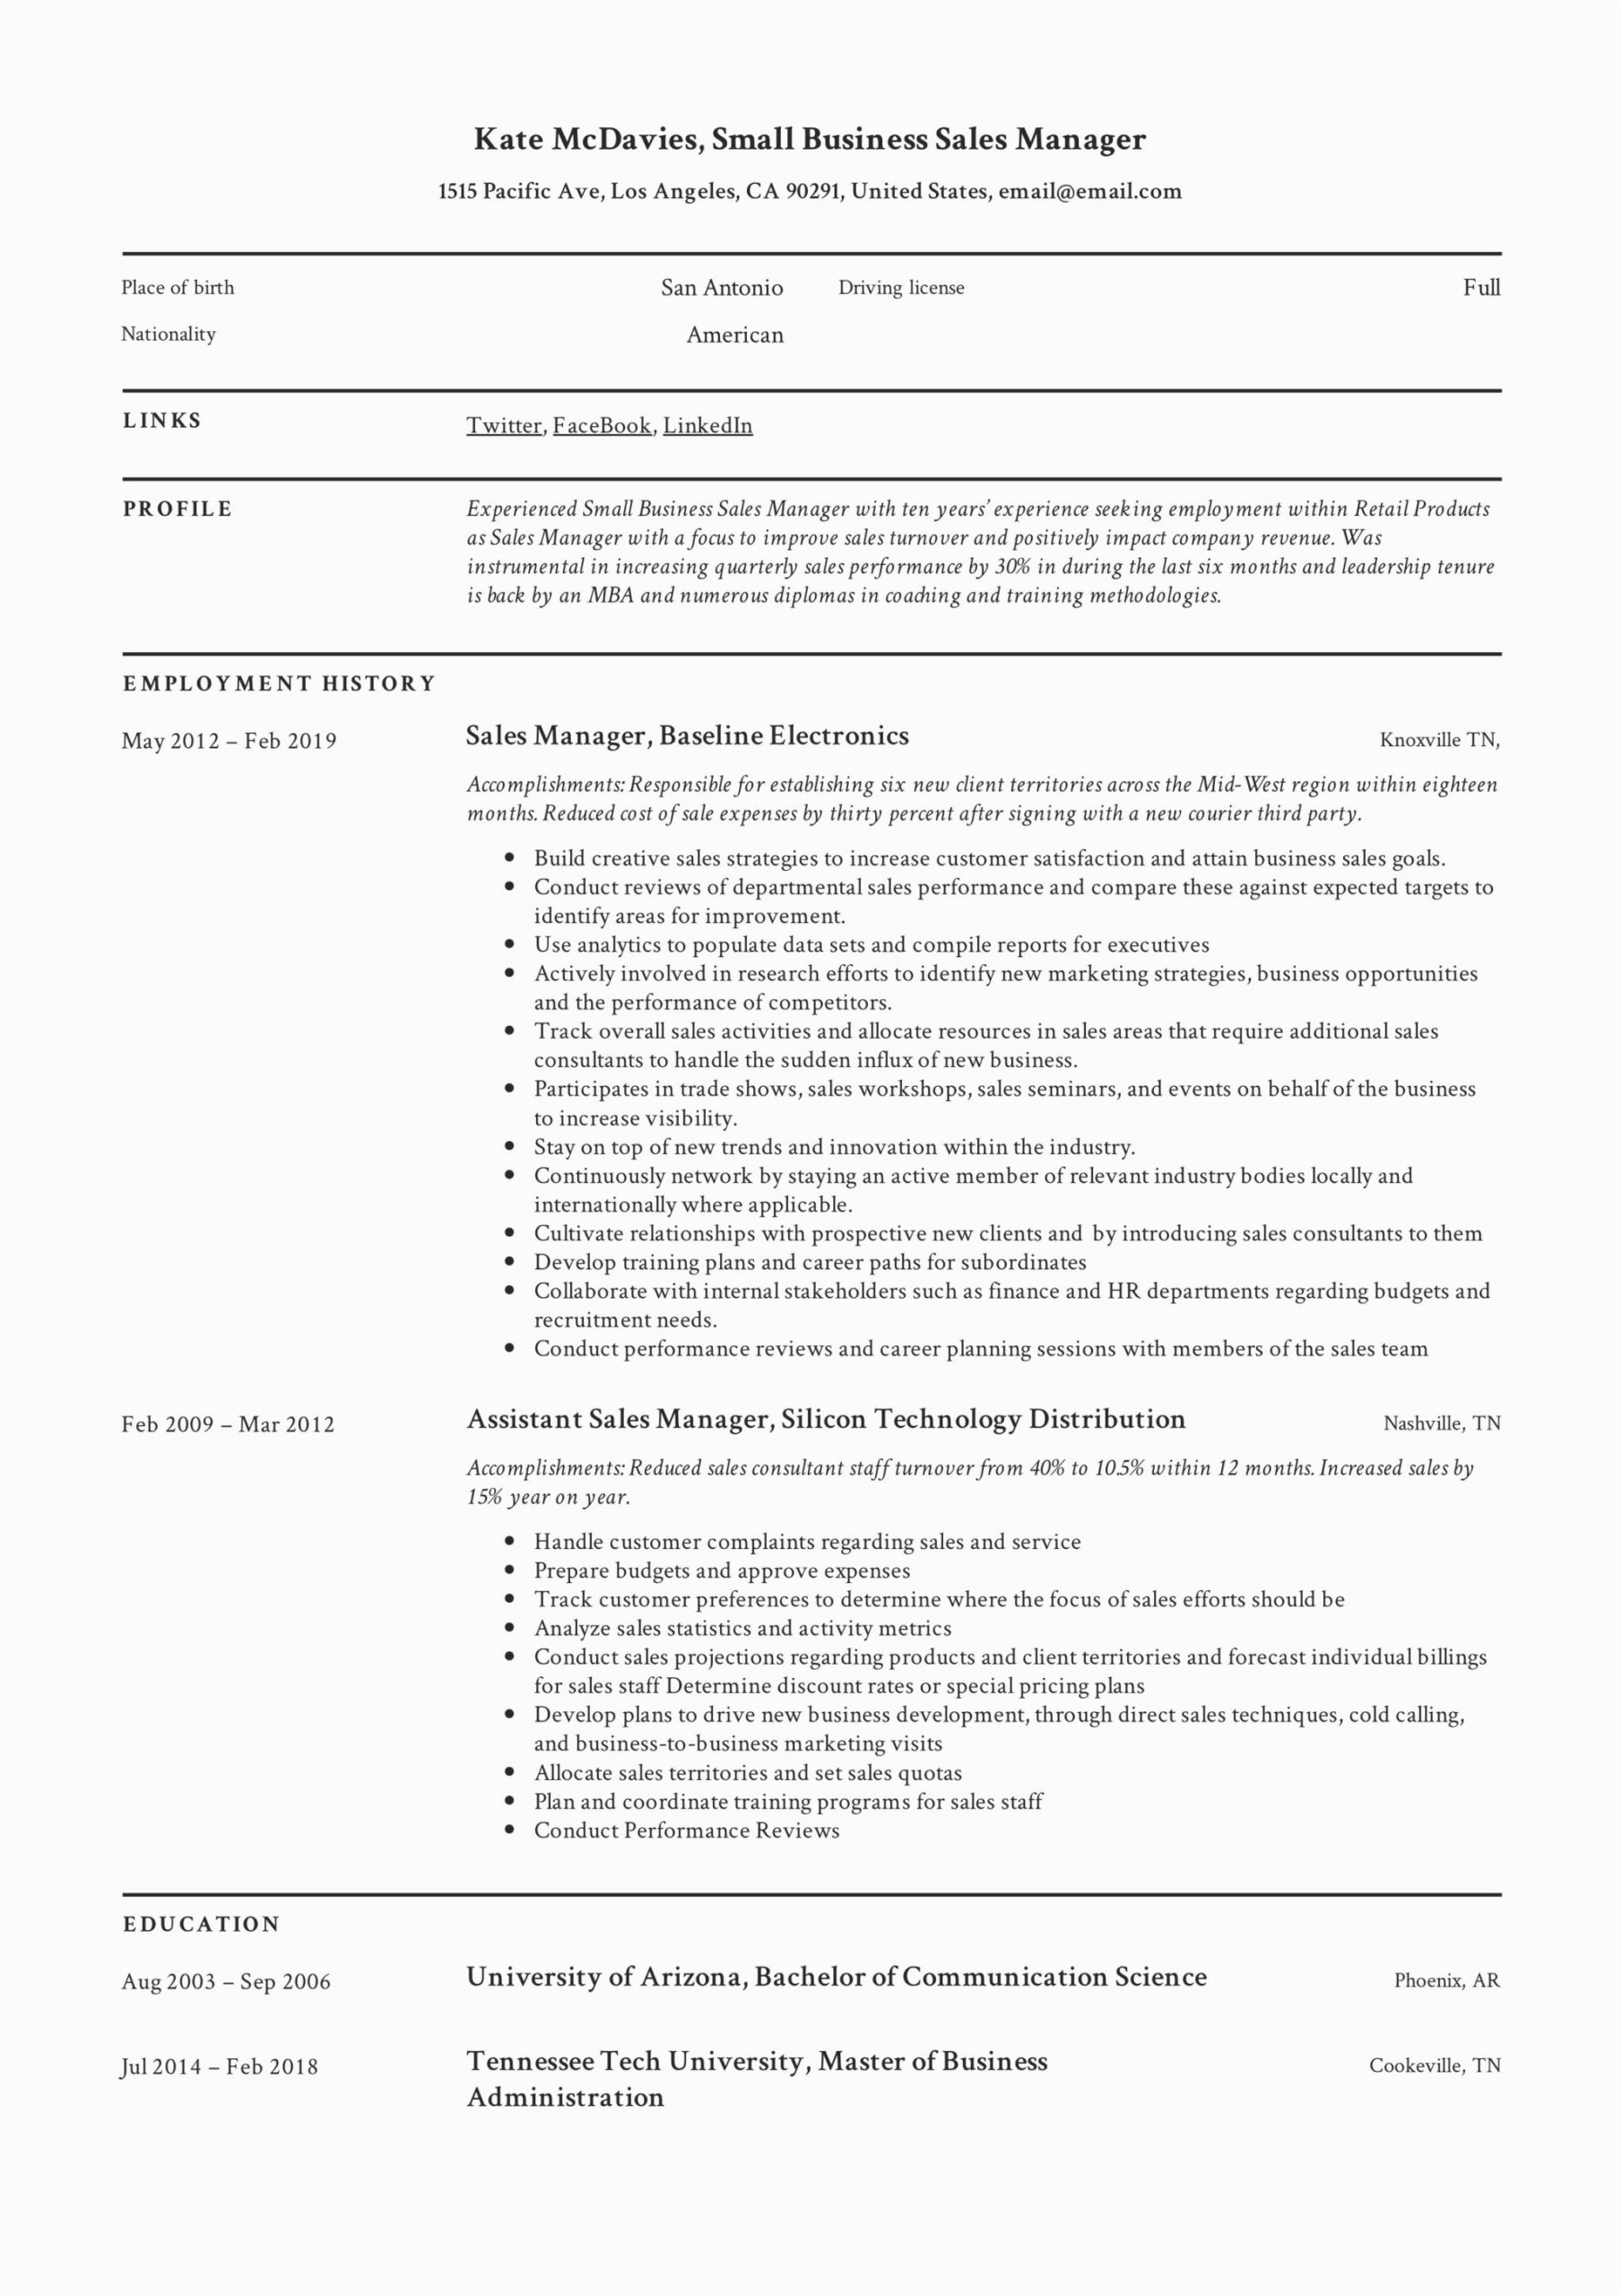 Sample Resume for Sales Manager Job Guide Small Business Sales Manager Resume [x12] Sample Pdf